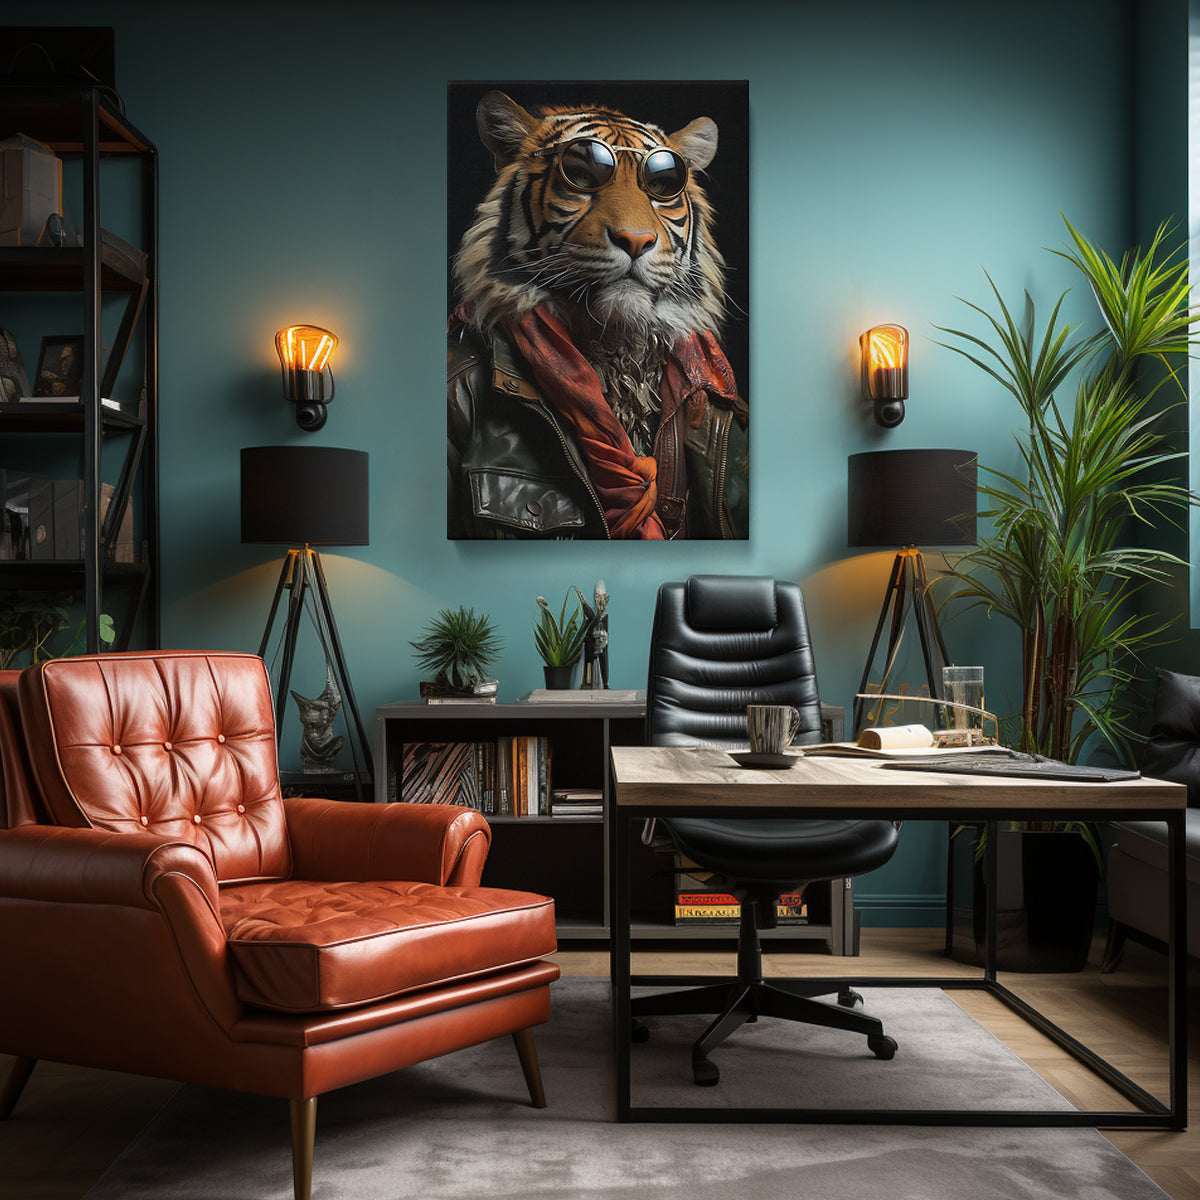 Charming Tiger, Fashionable Wildlife, Animal Lovers Abstract Art Print Artesty   